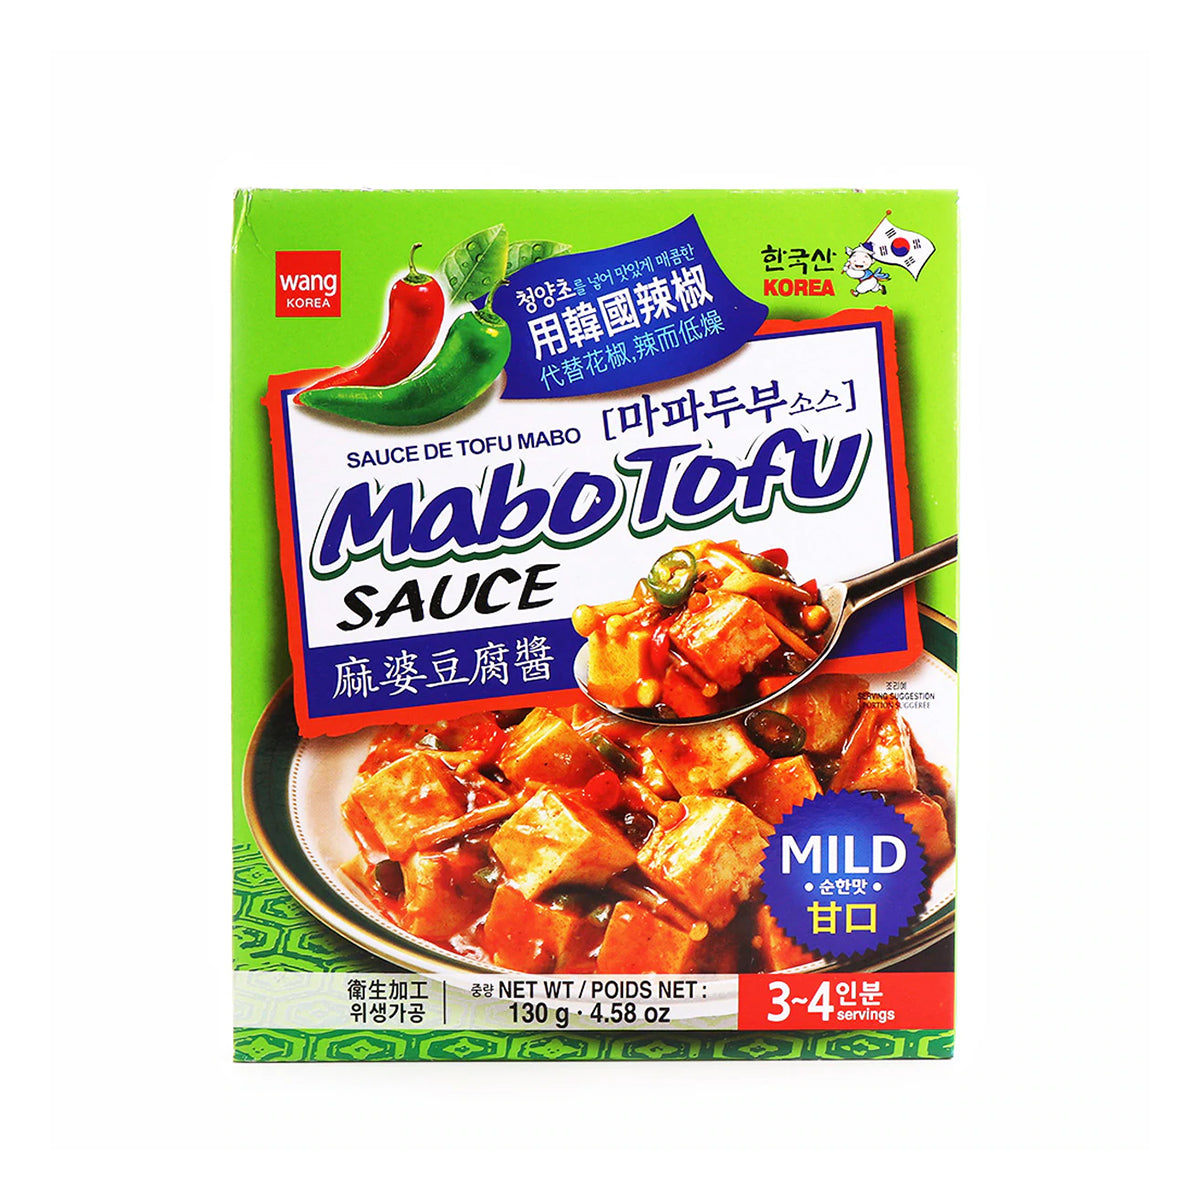 wang mabo tofu sauce-mild - 4.58oz